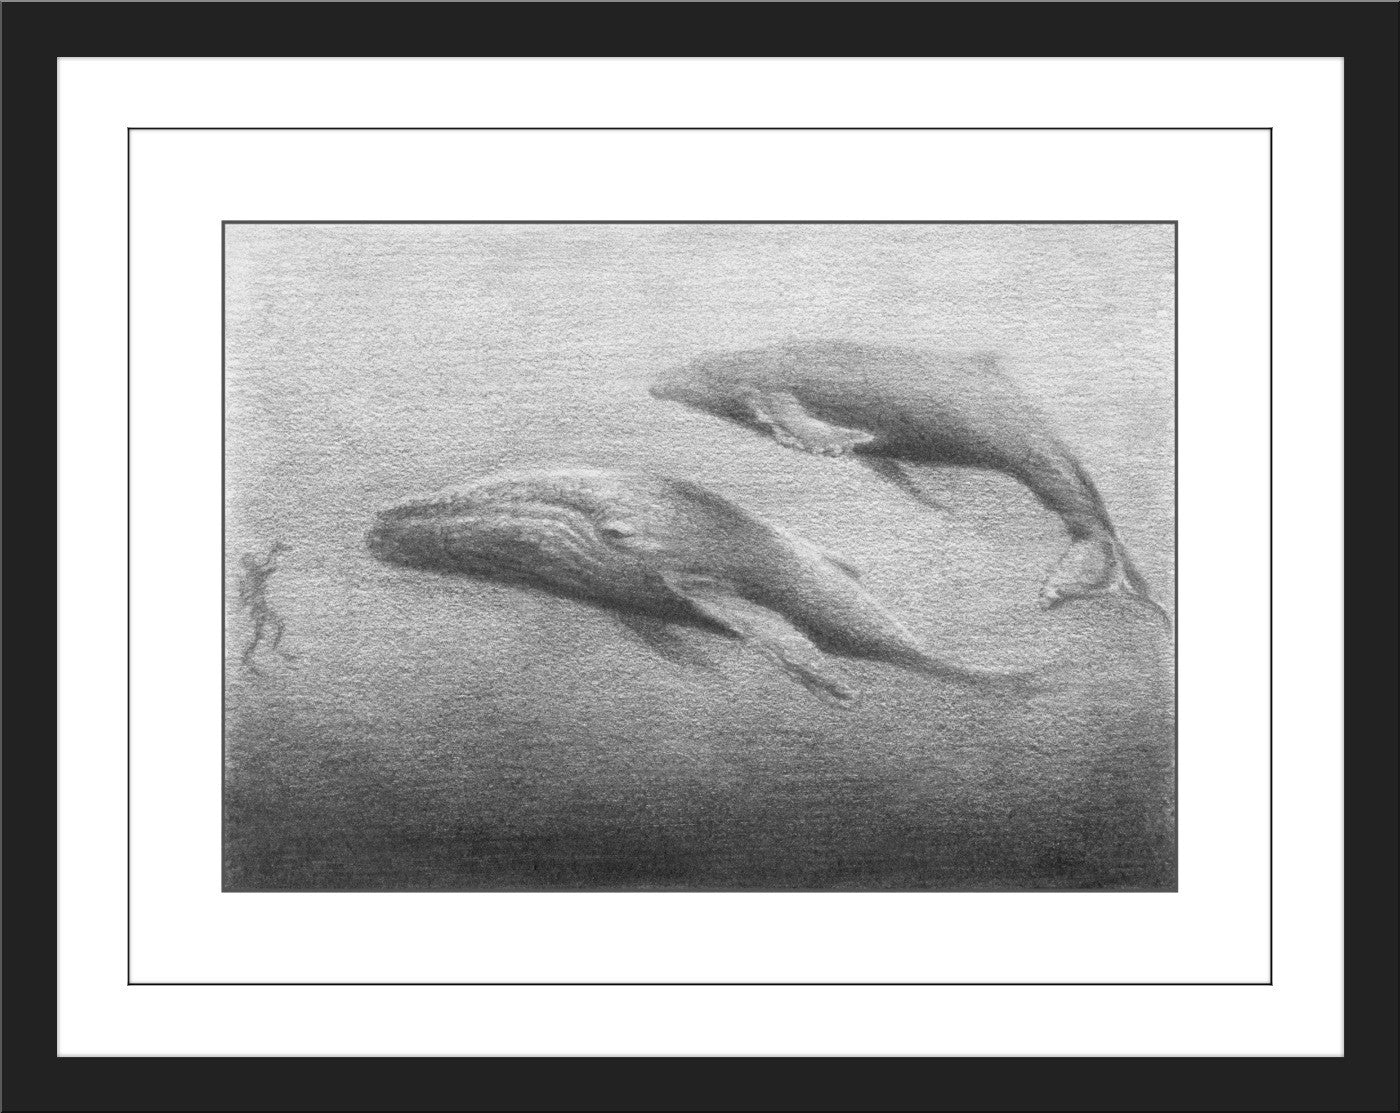 David Welker "Whales"